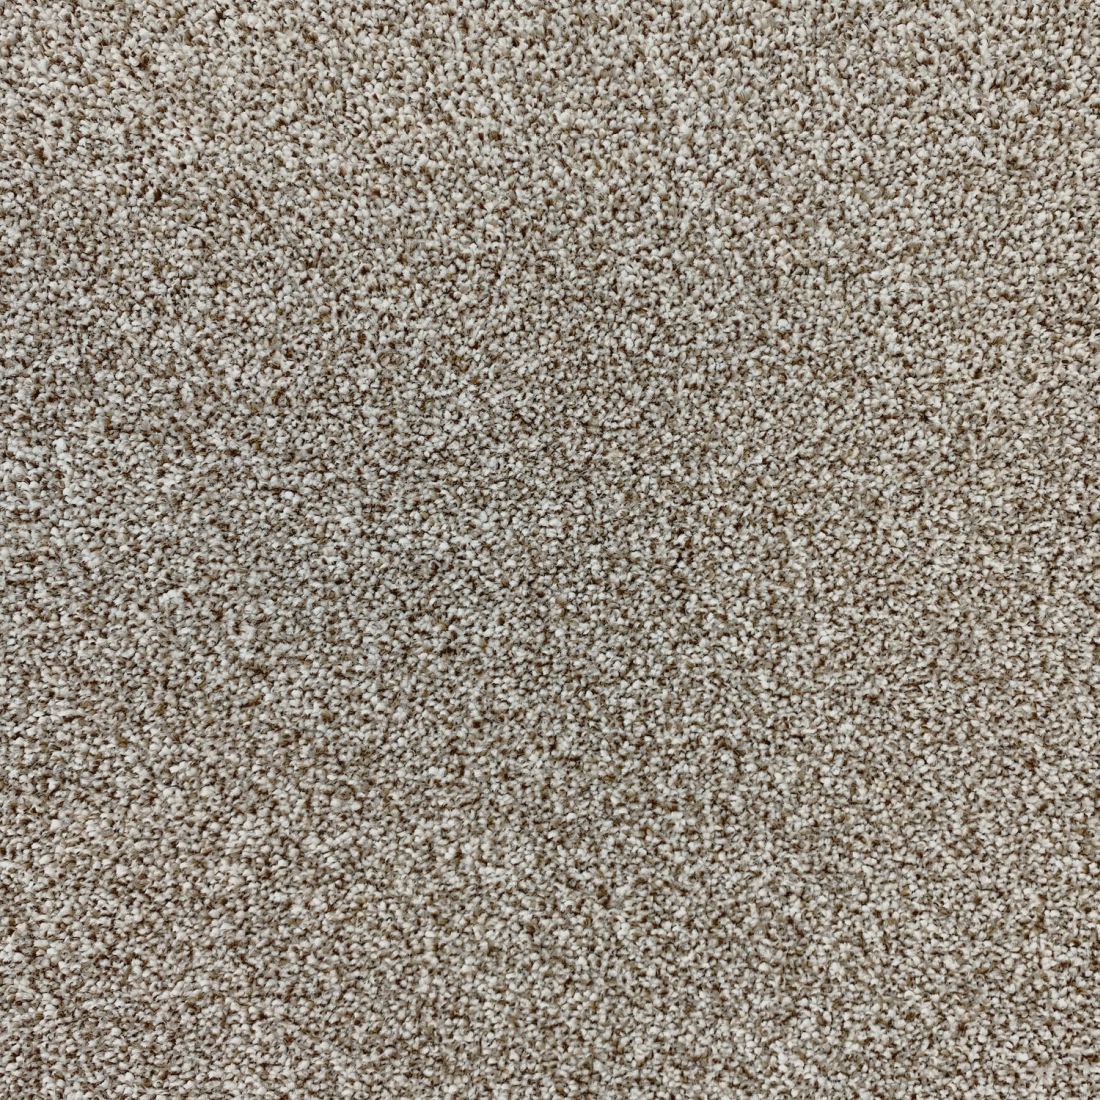 Invincible Rustic Stain Resistant Twist Carpet - Elegance